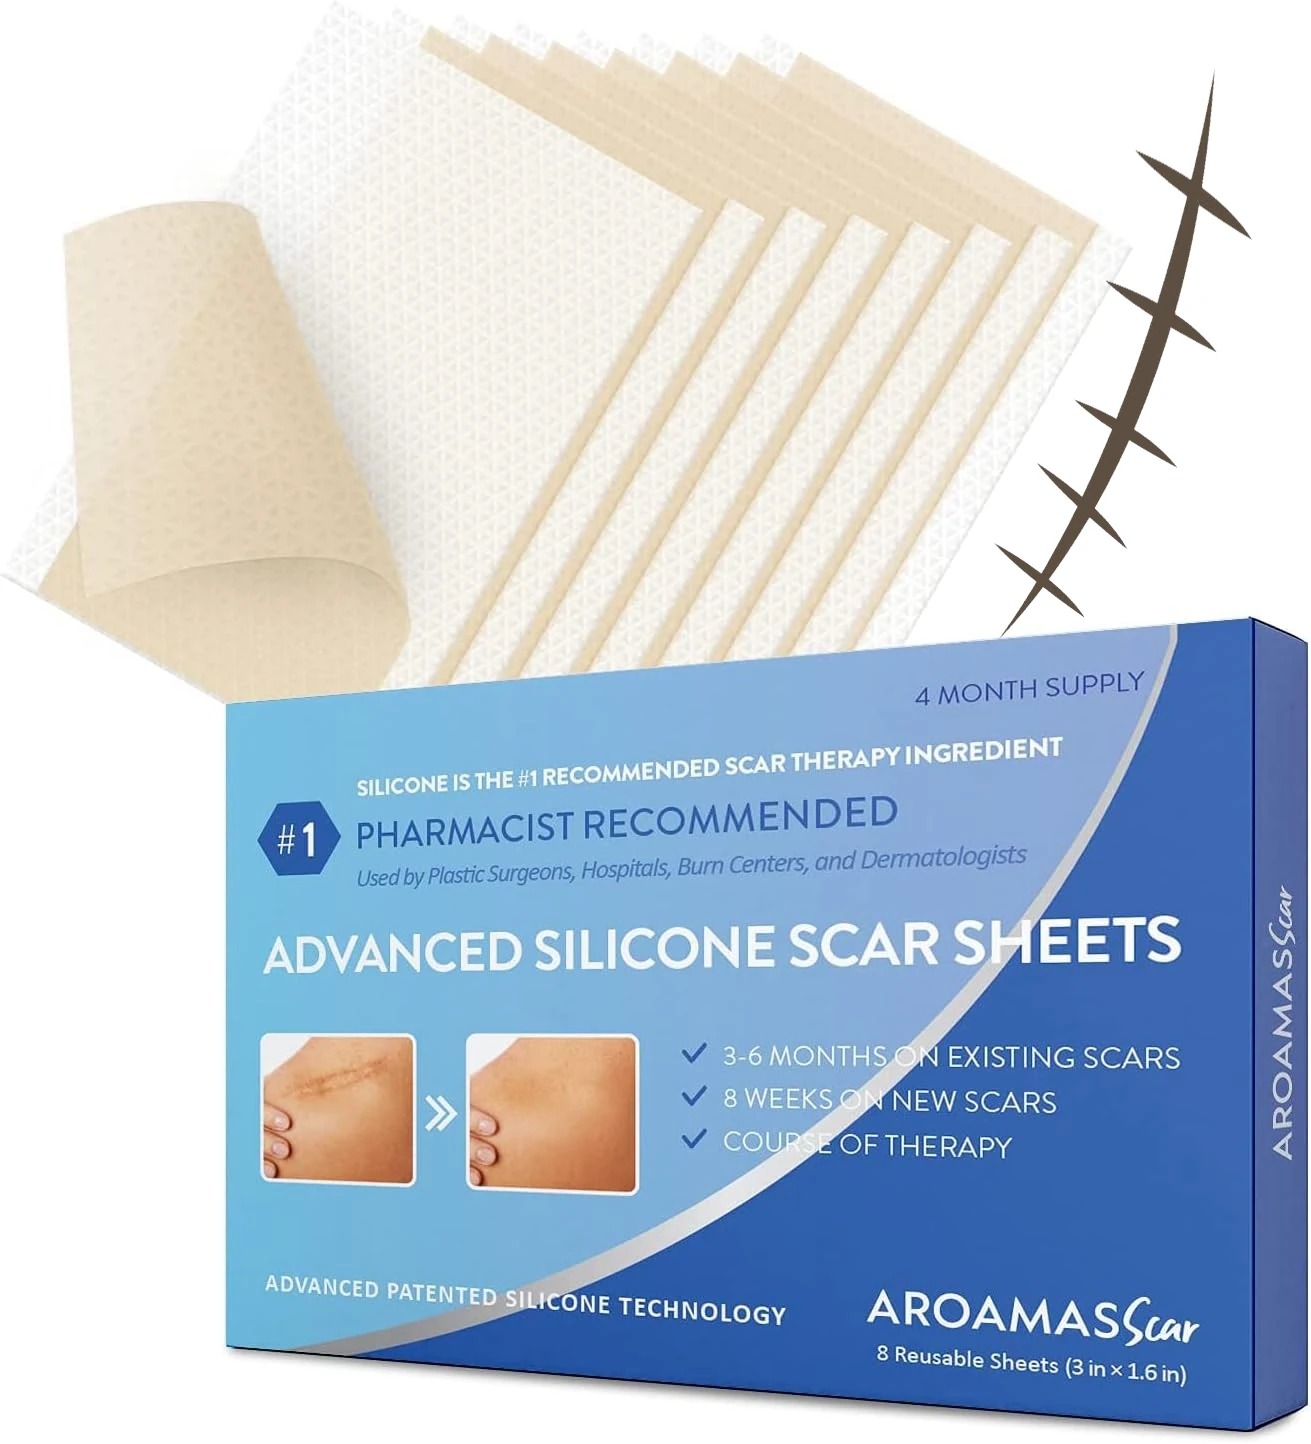 Aroamas Scar Professional Soft Silicone 